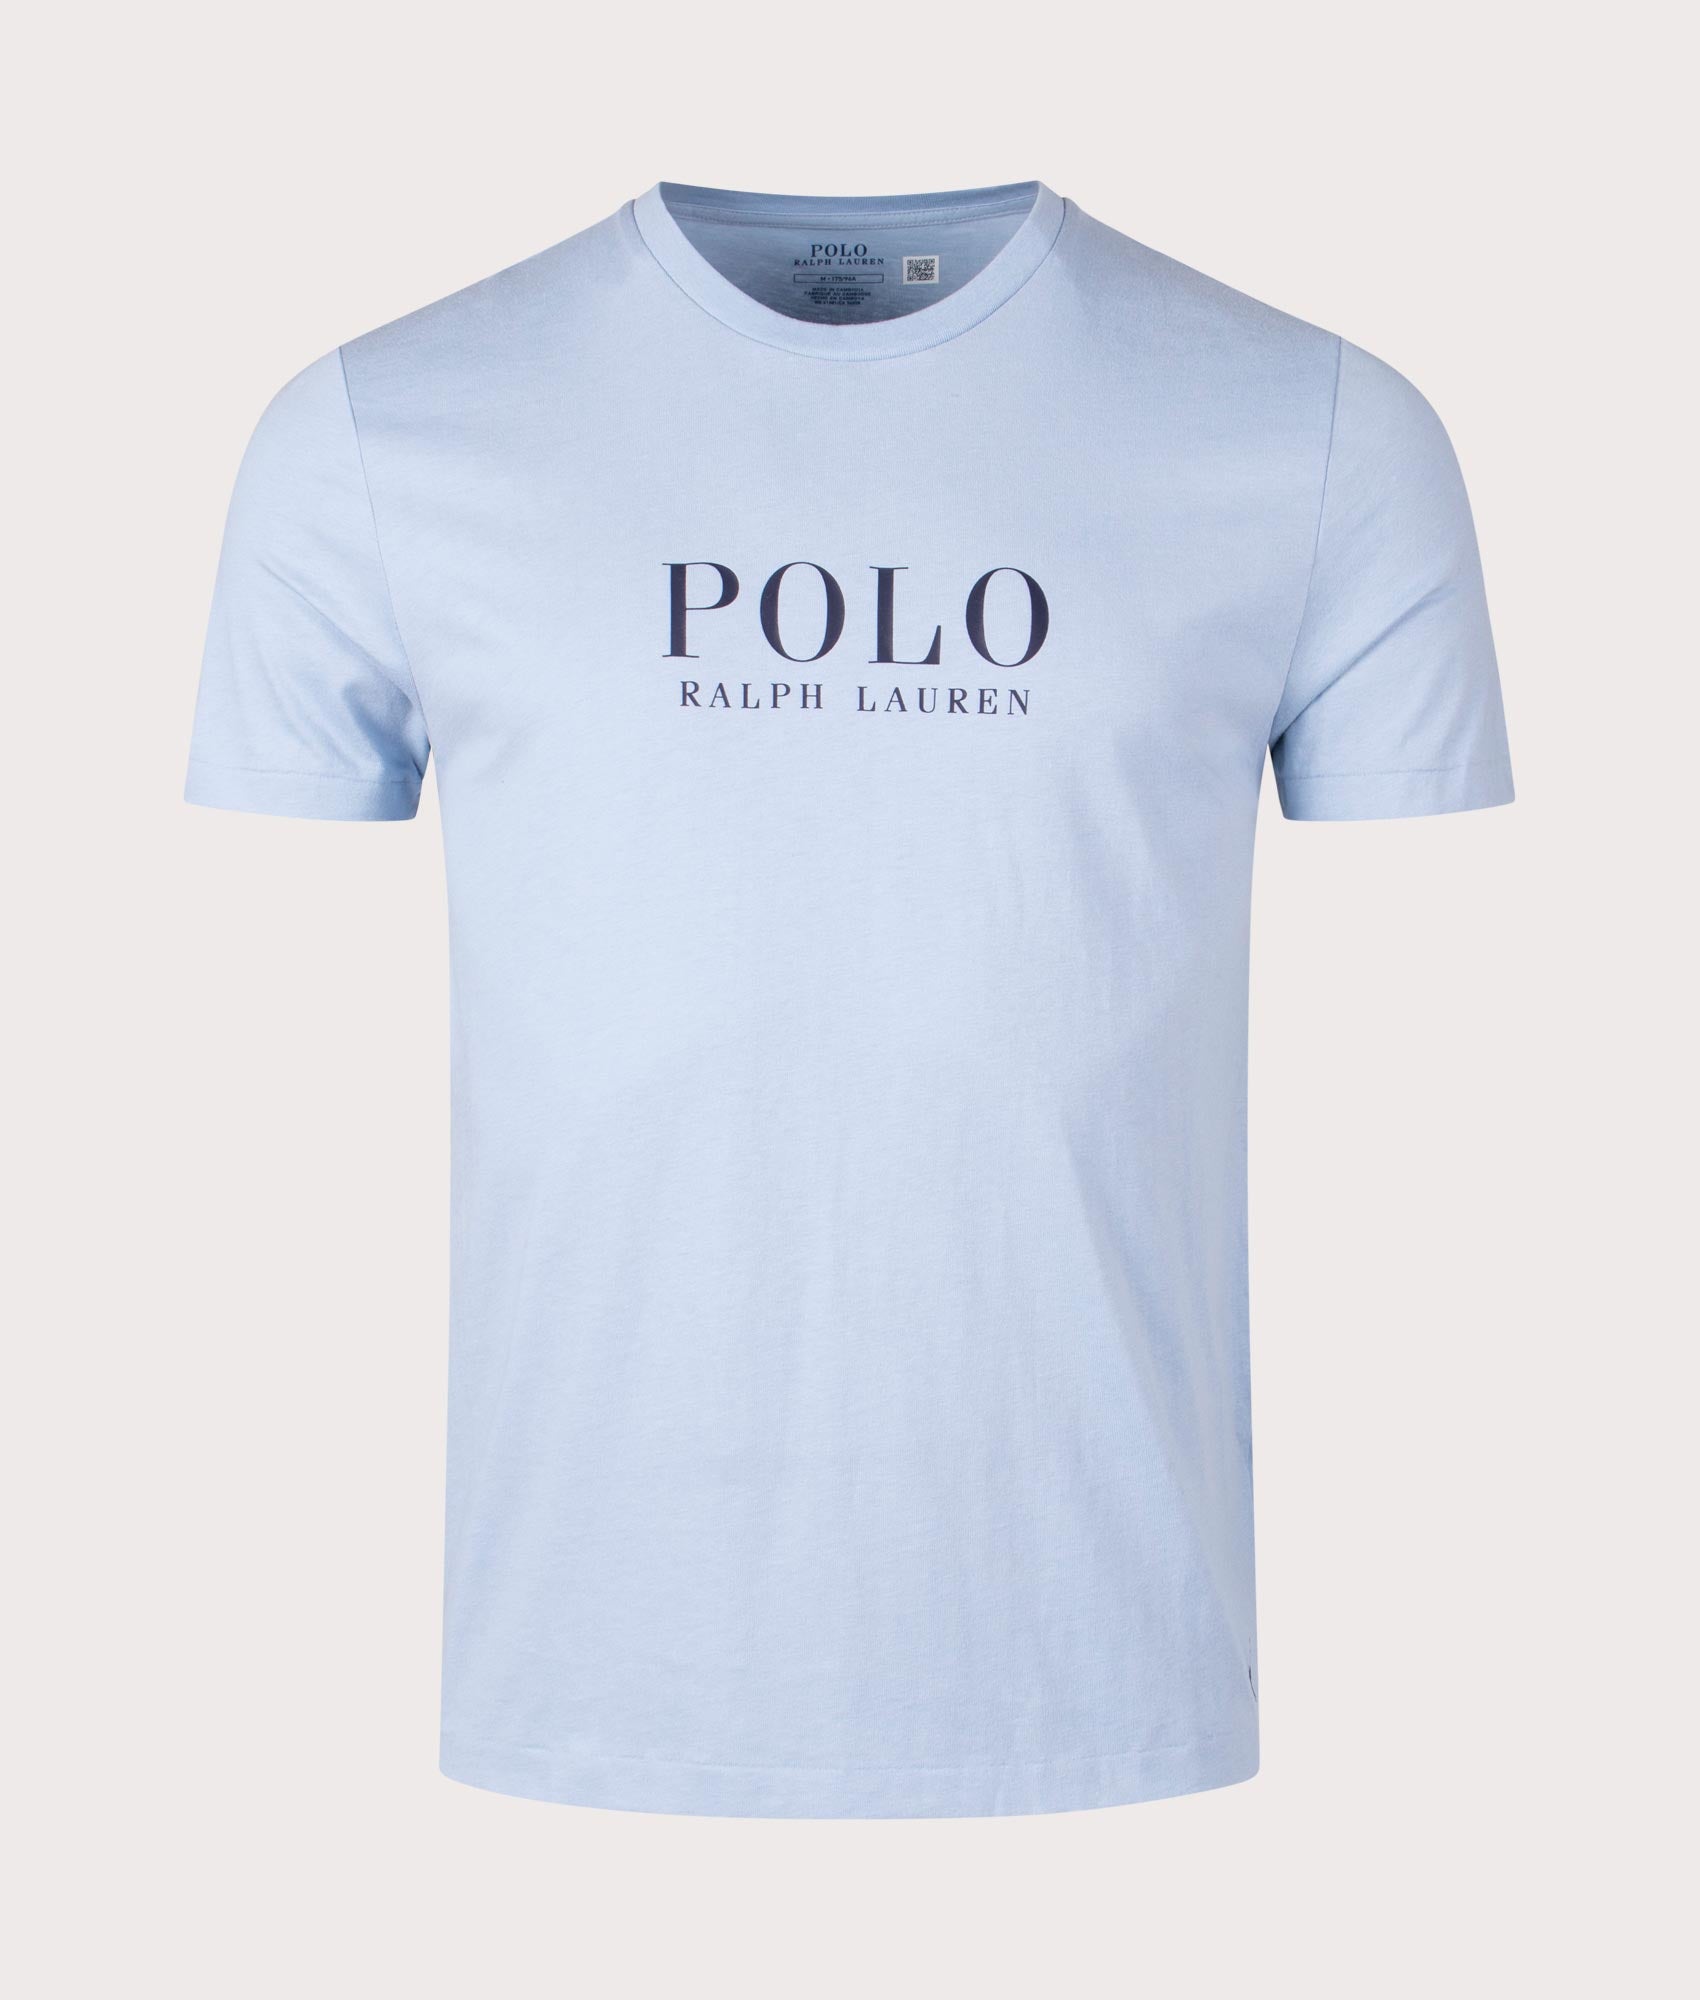 Polo Ralph Lauren Mens Lightweight Crew Neck T-Shirt - Colour: 009 Cruise Navy - Size: Large